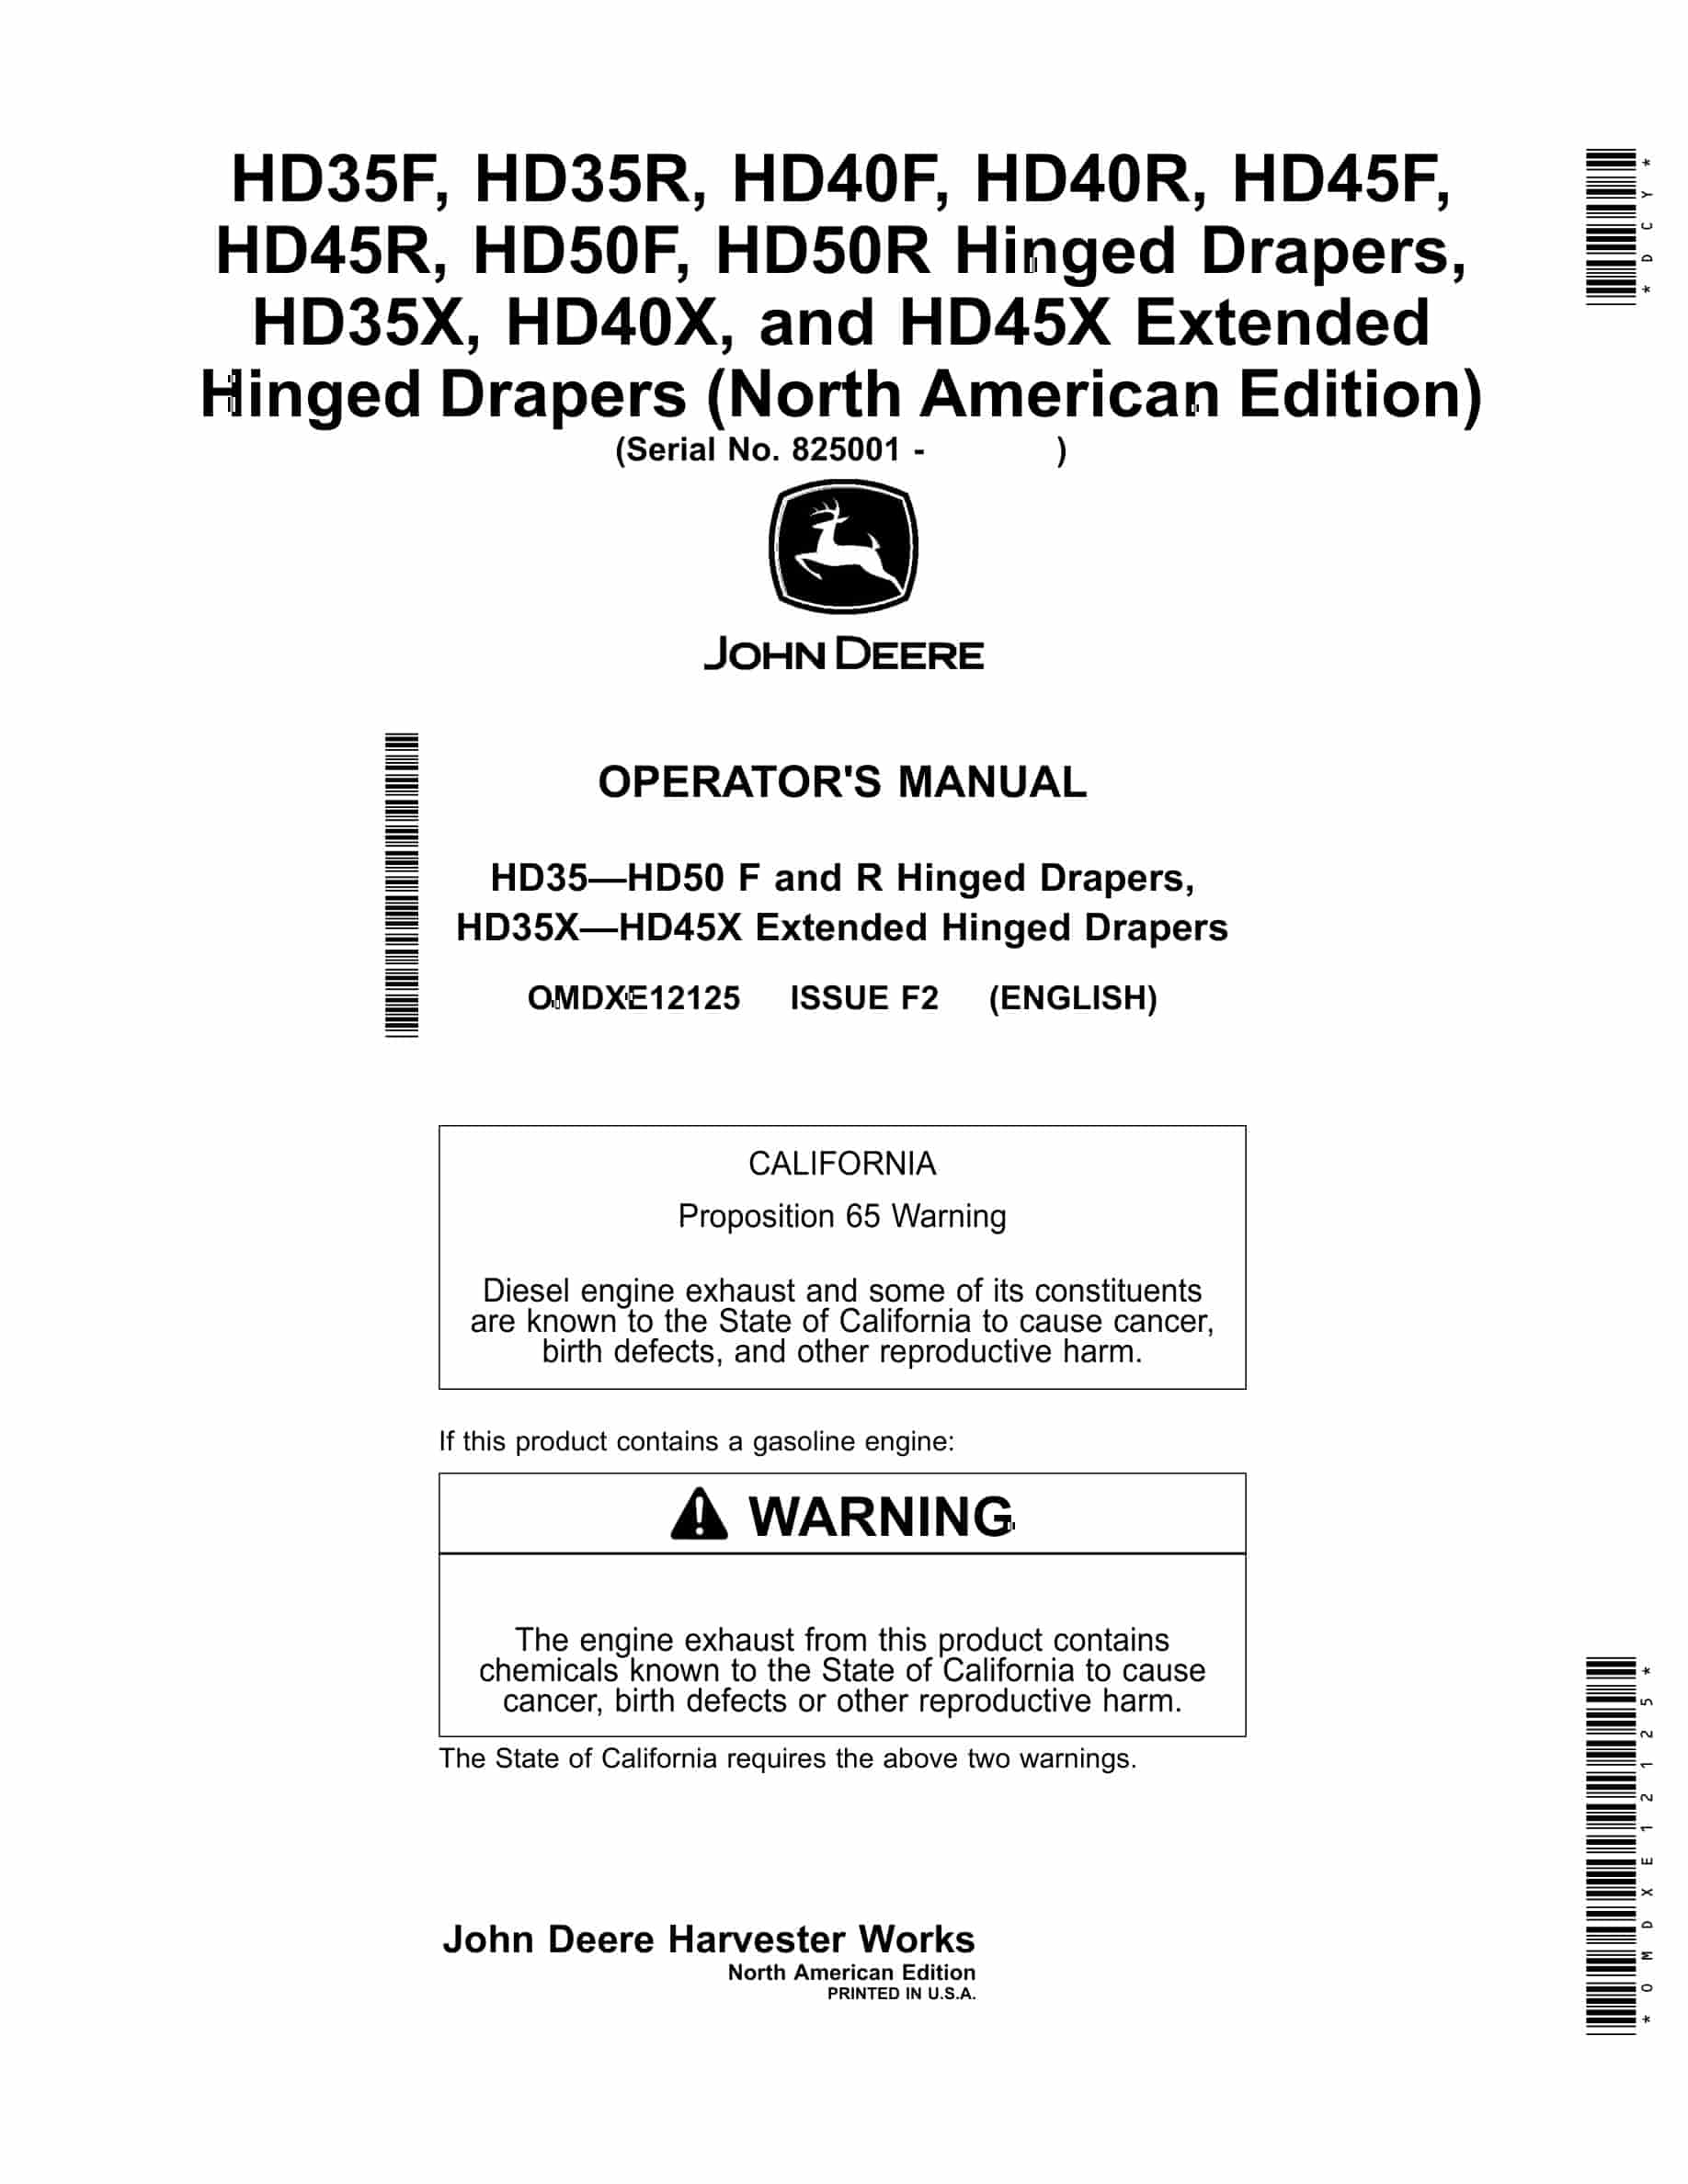 John Deere HD35 – HD50 F and R Hinged Drapers and HD35X Operator Manual OMDXE12125-1